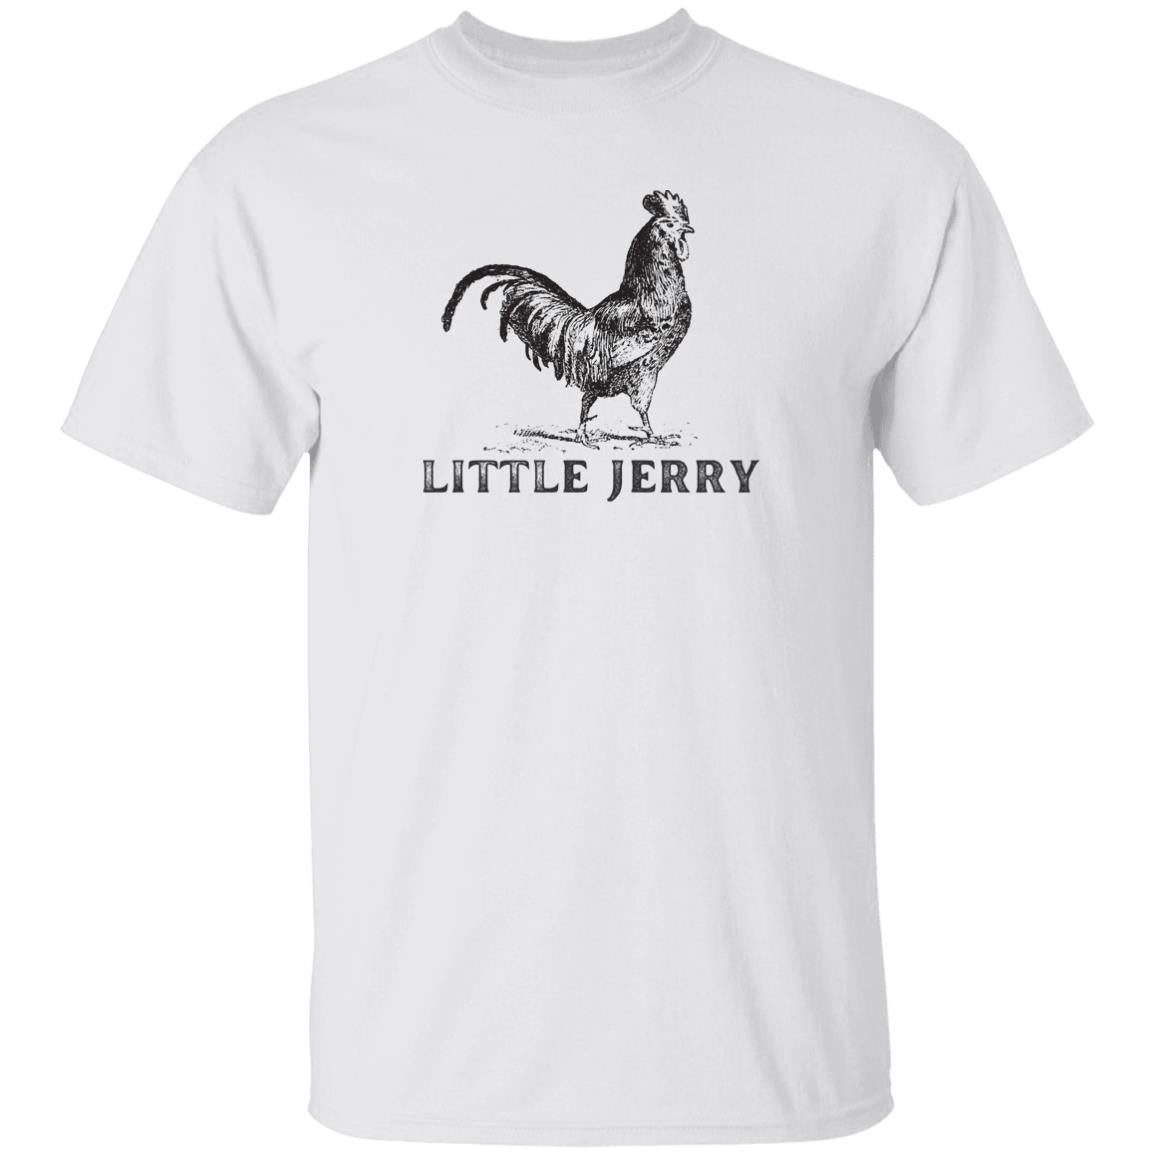 Seinfeld Little Jerry Graphic T-Shirt